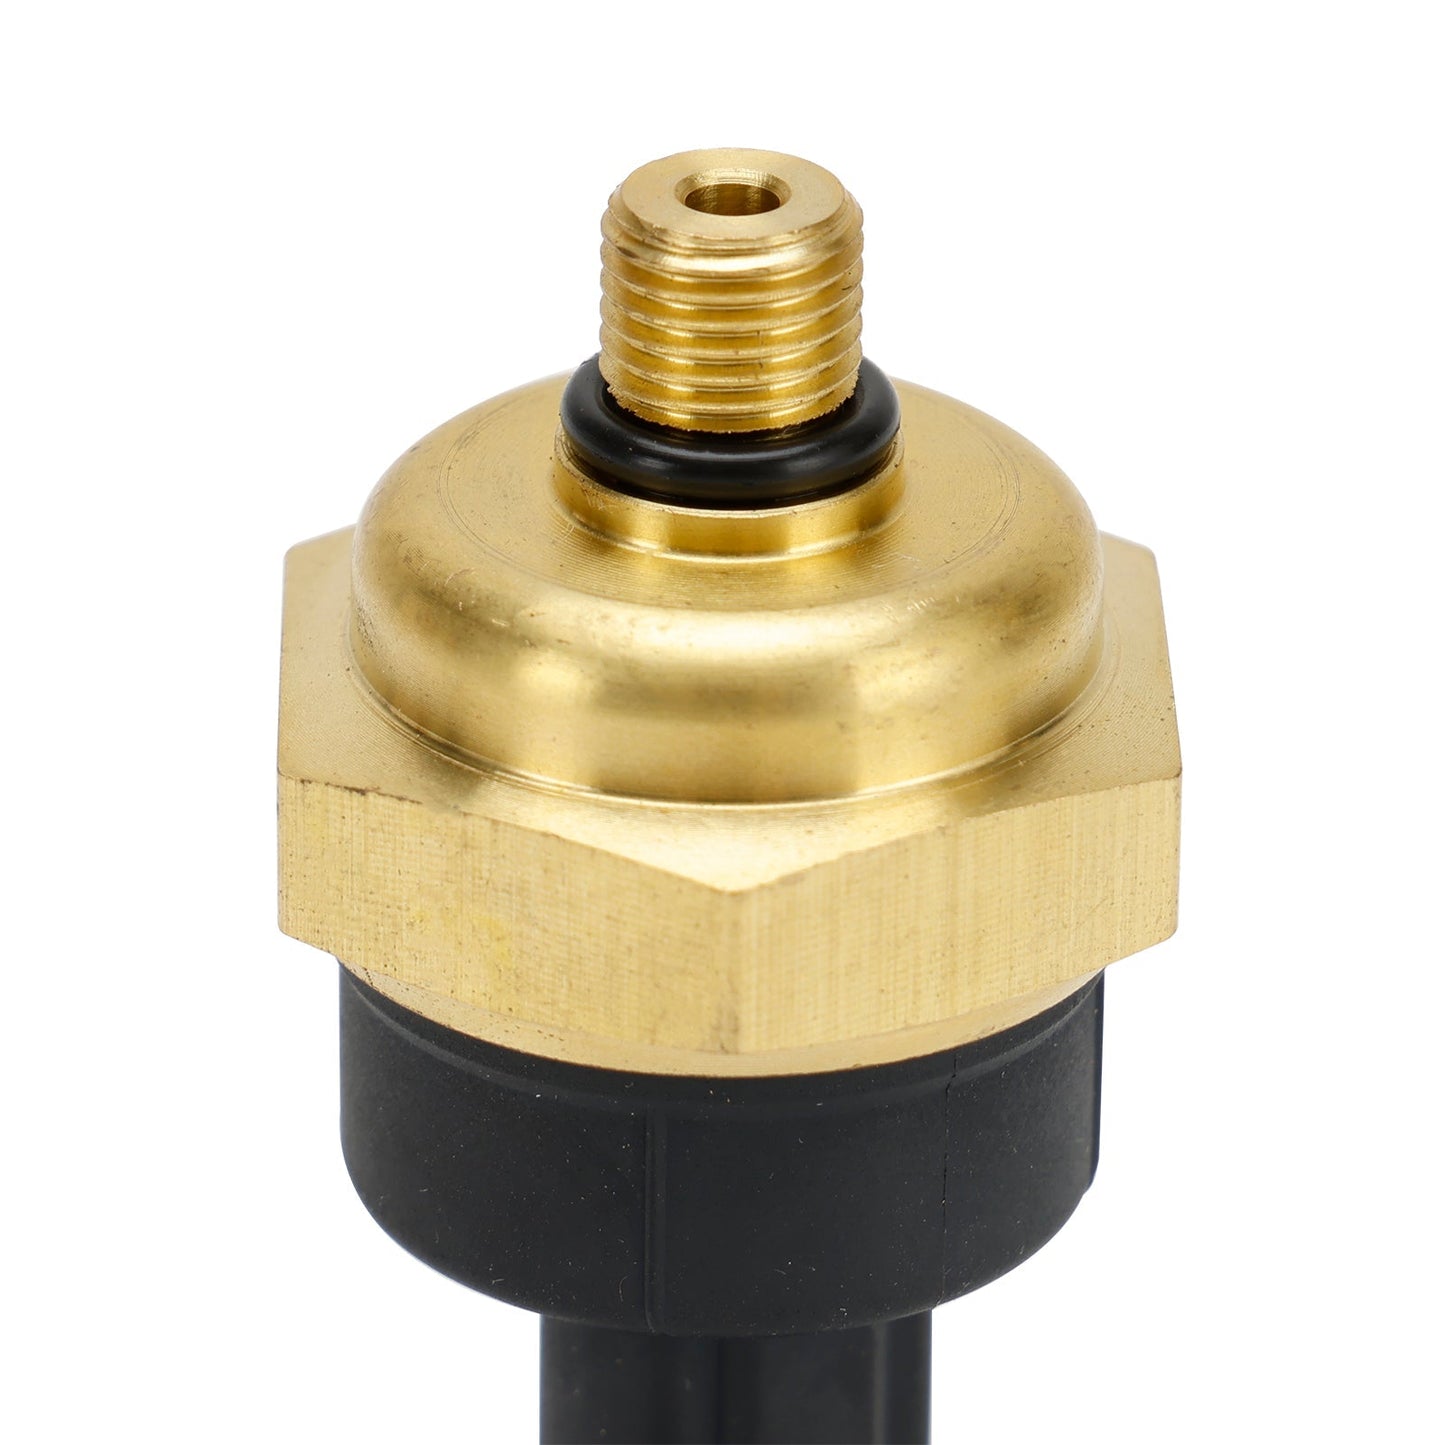 6674315 6674316 Oil Pressure Sensor Switch For Bobcat Loader 753 S175 T300 Generic